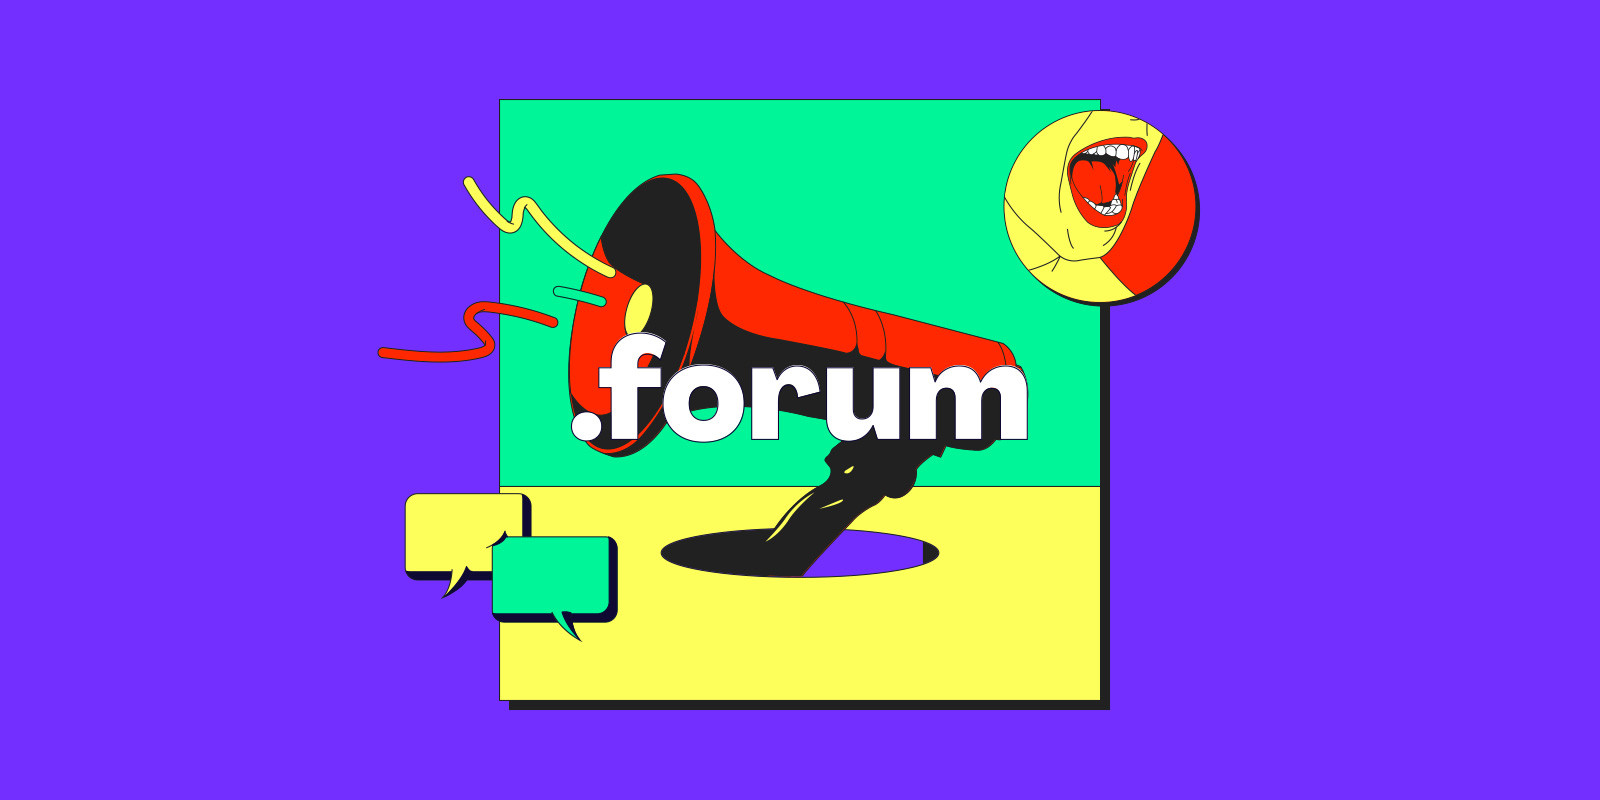 On November 16, .forum is entering the Sunrise phase